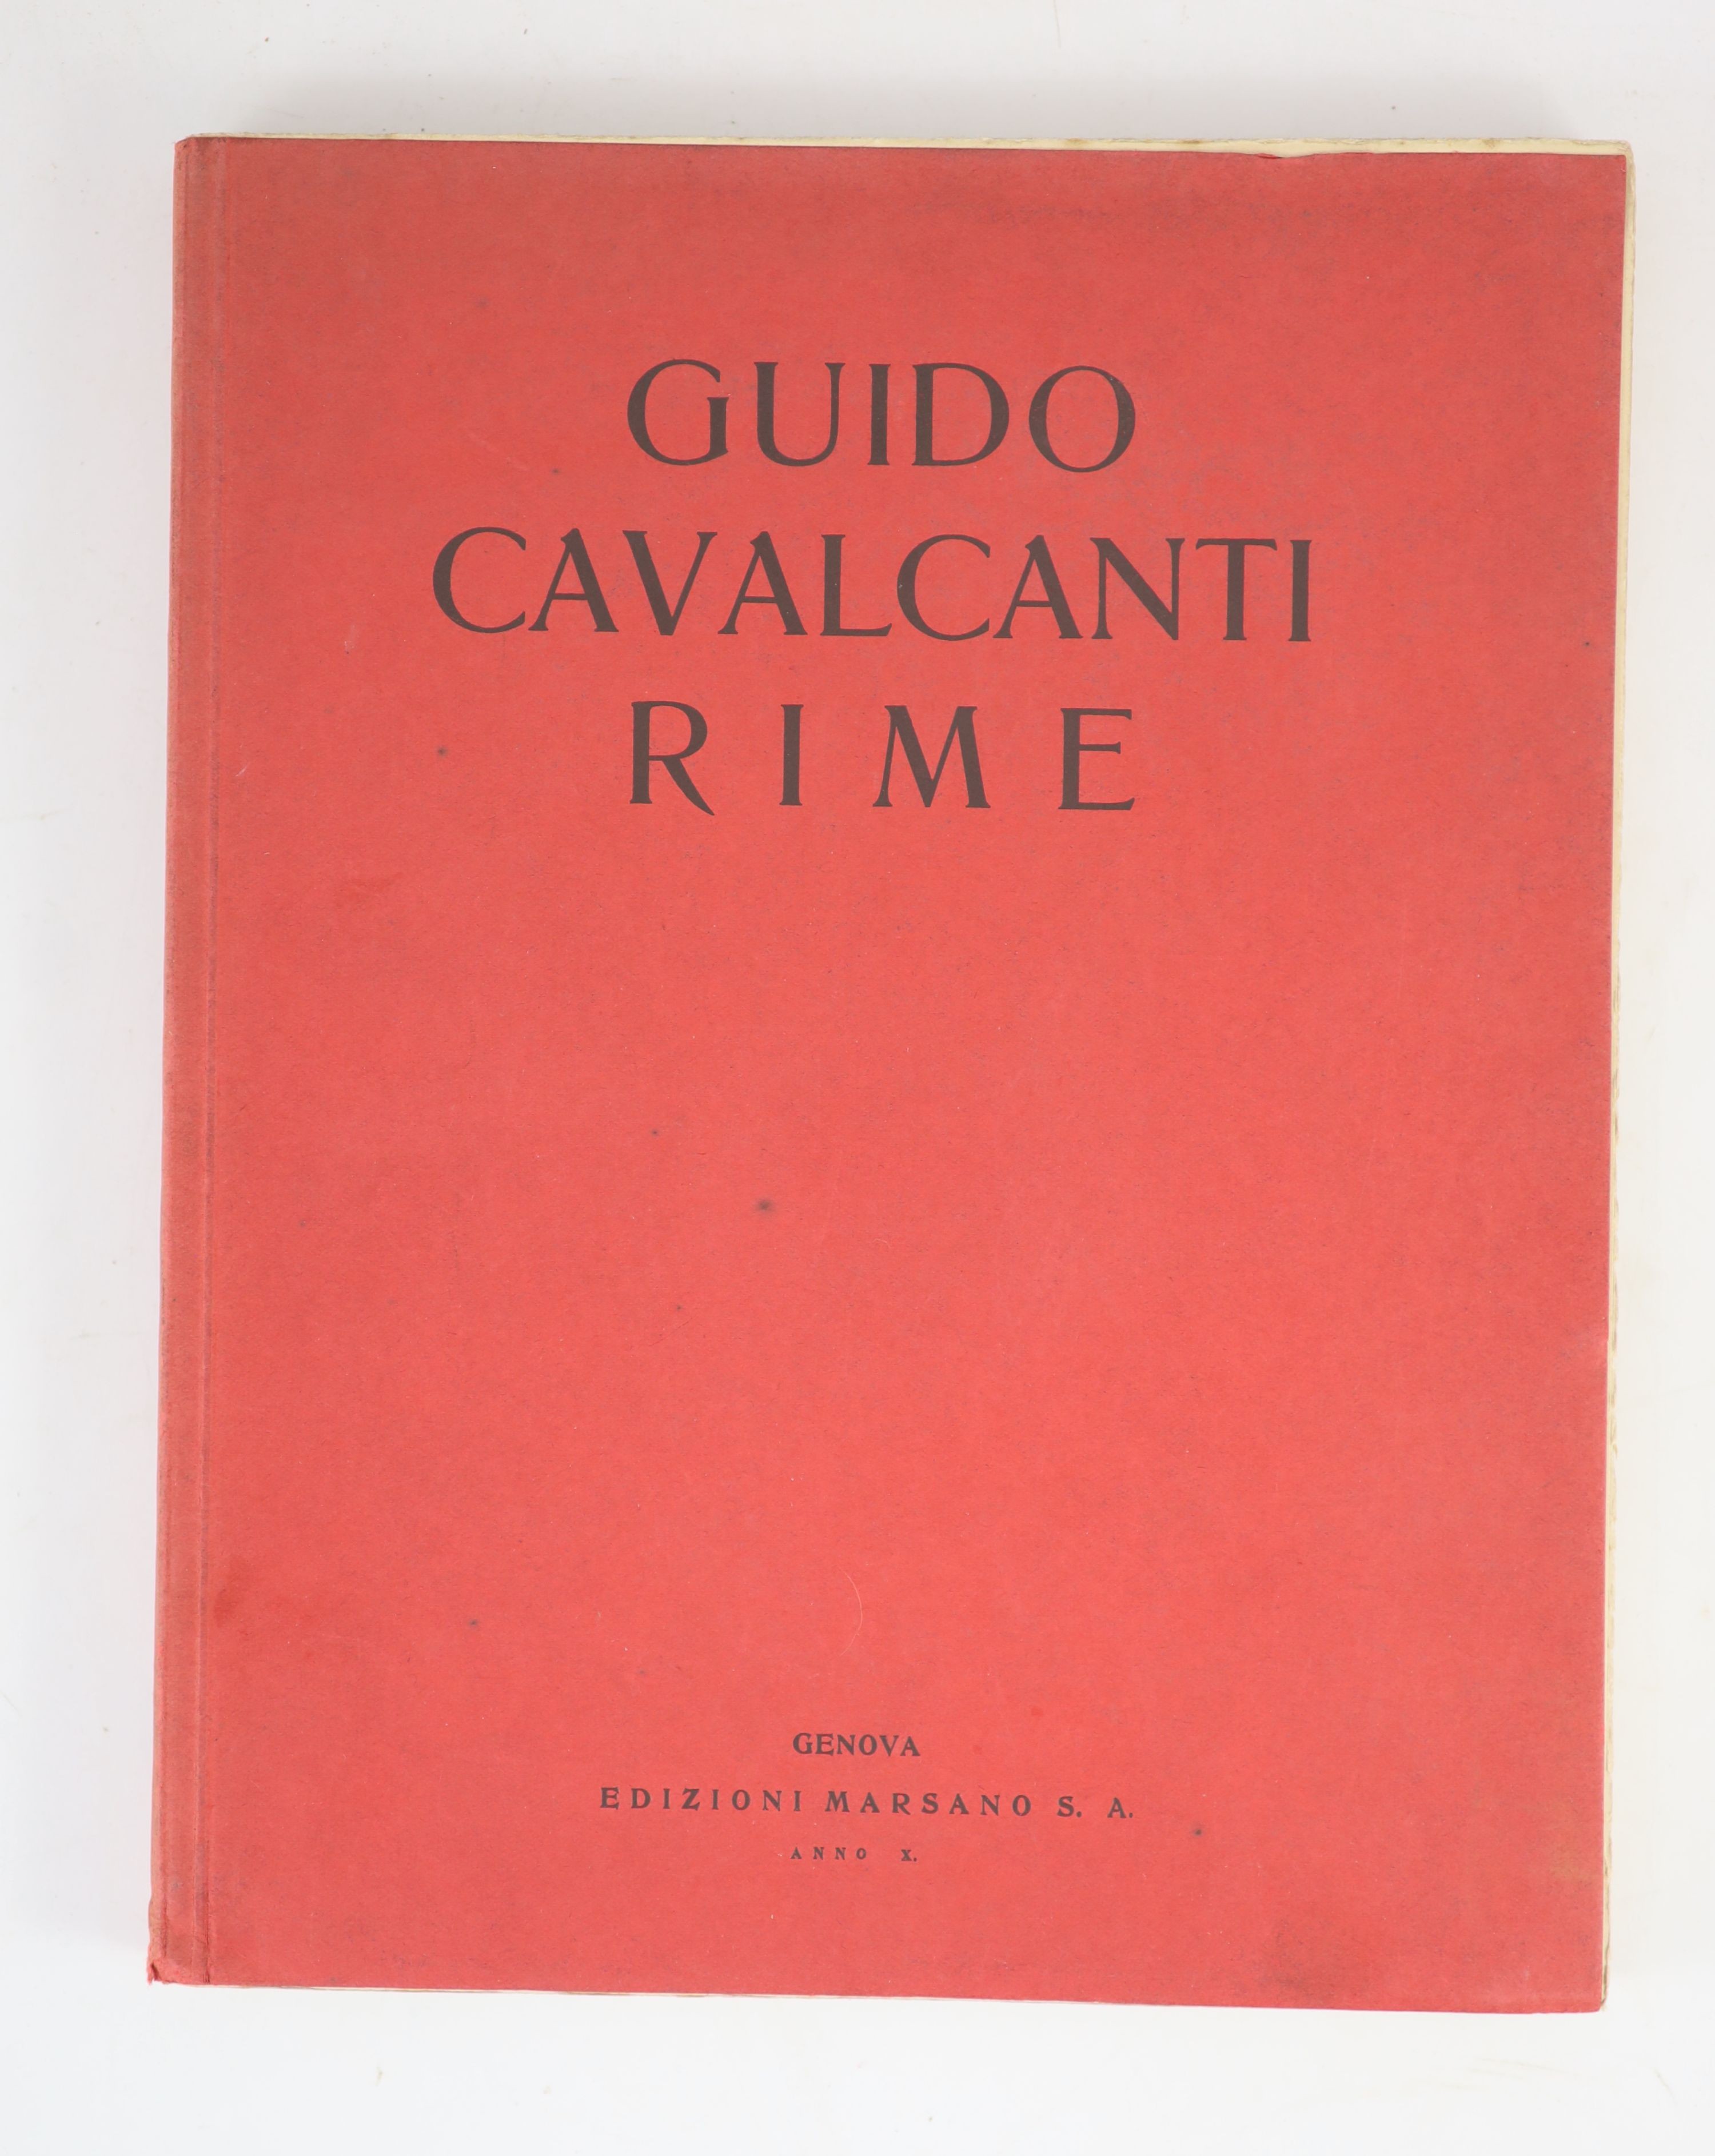 Pound, Ezra (editor) - Guido Cavalcanti Rime, 1st edition, 4to, dull red card wraps, 40 plates, one of 500 printed at Pound’s own expense, Edizioni Marsano, Genova, 1932, in Solander case.